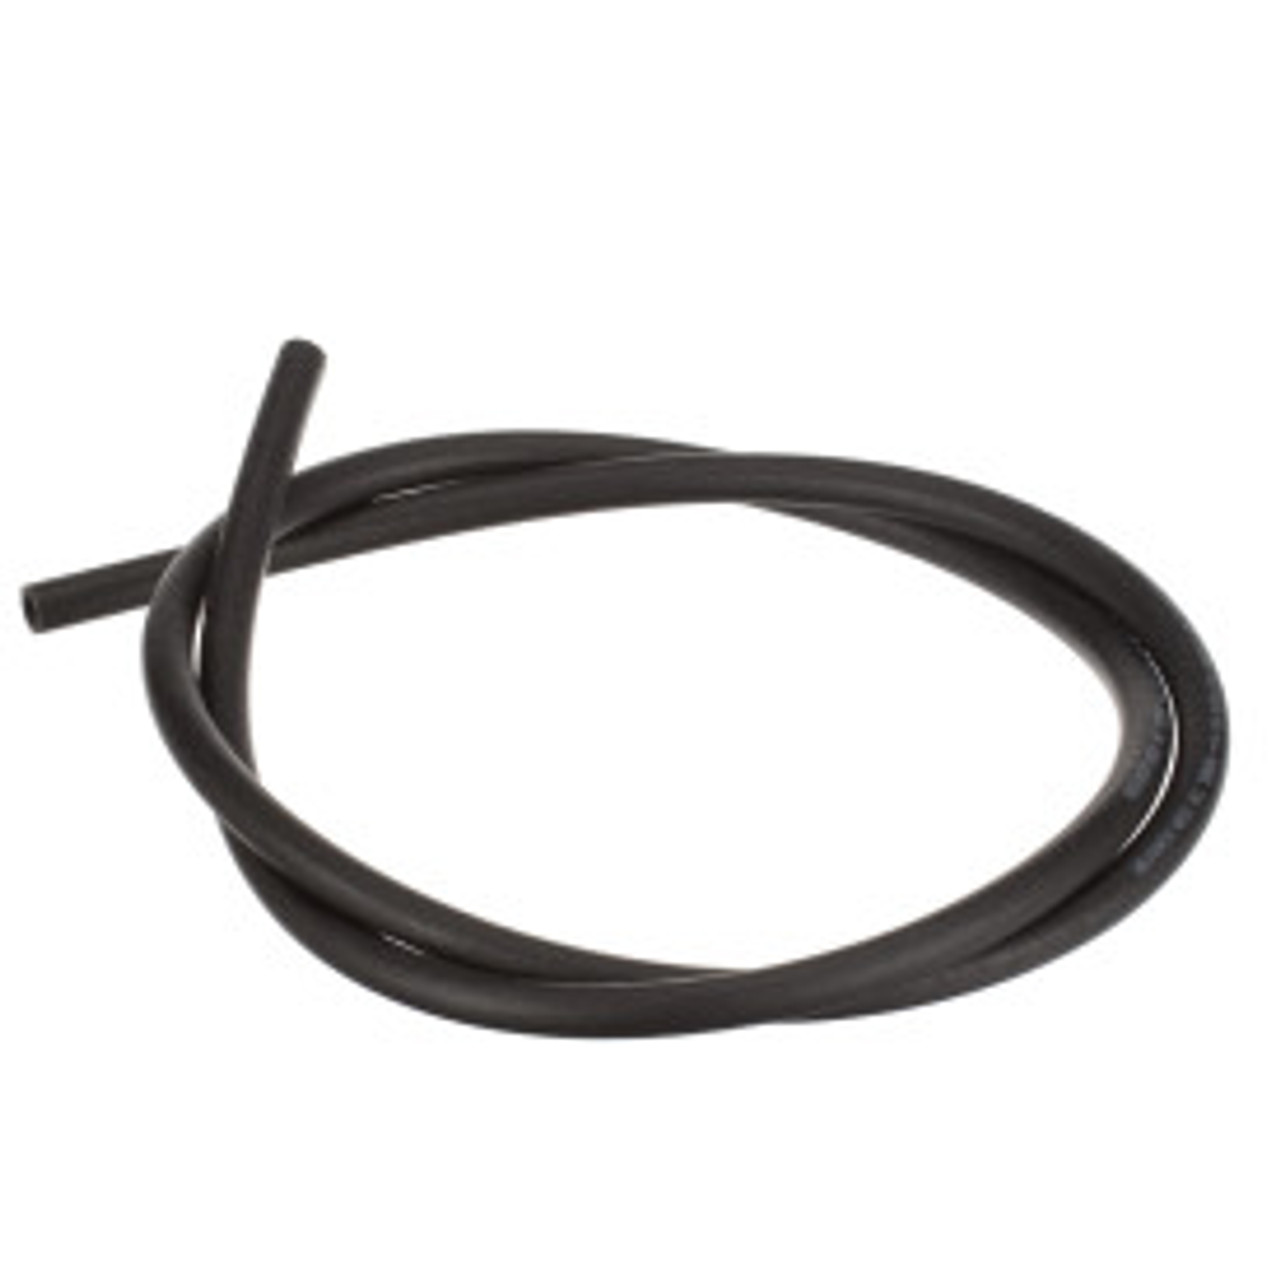 Cycle Standard - Asphalt Wire Loom -10 Foot x 3/8 inch